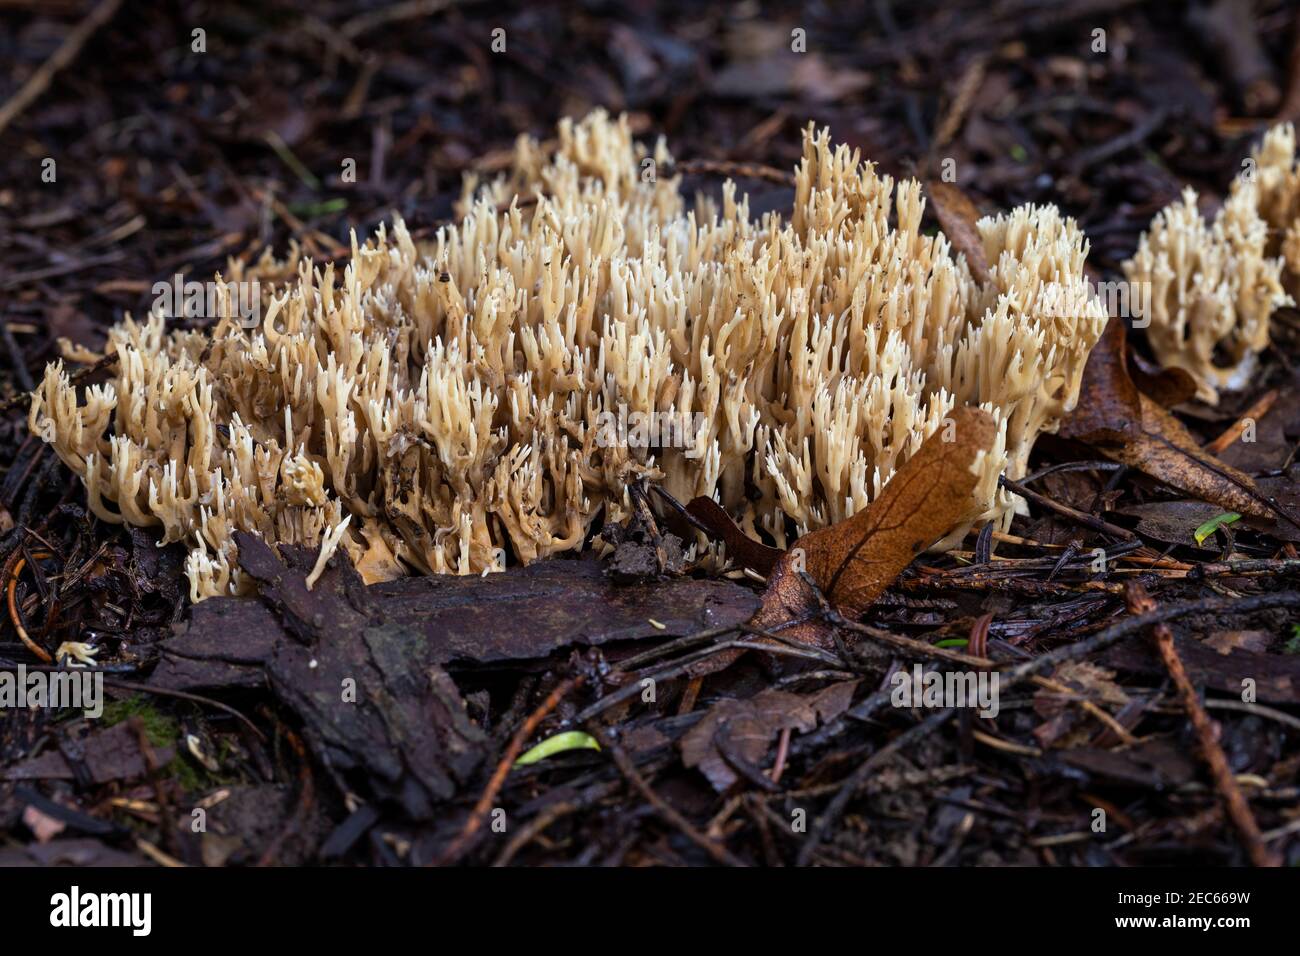 Close up of coral fungi on the woodland floor in autumn at Westonbirt Arboretum, Gloucestershire, England, UK Stock Photo